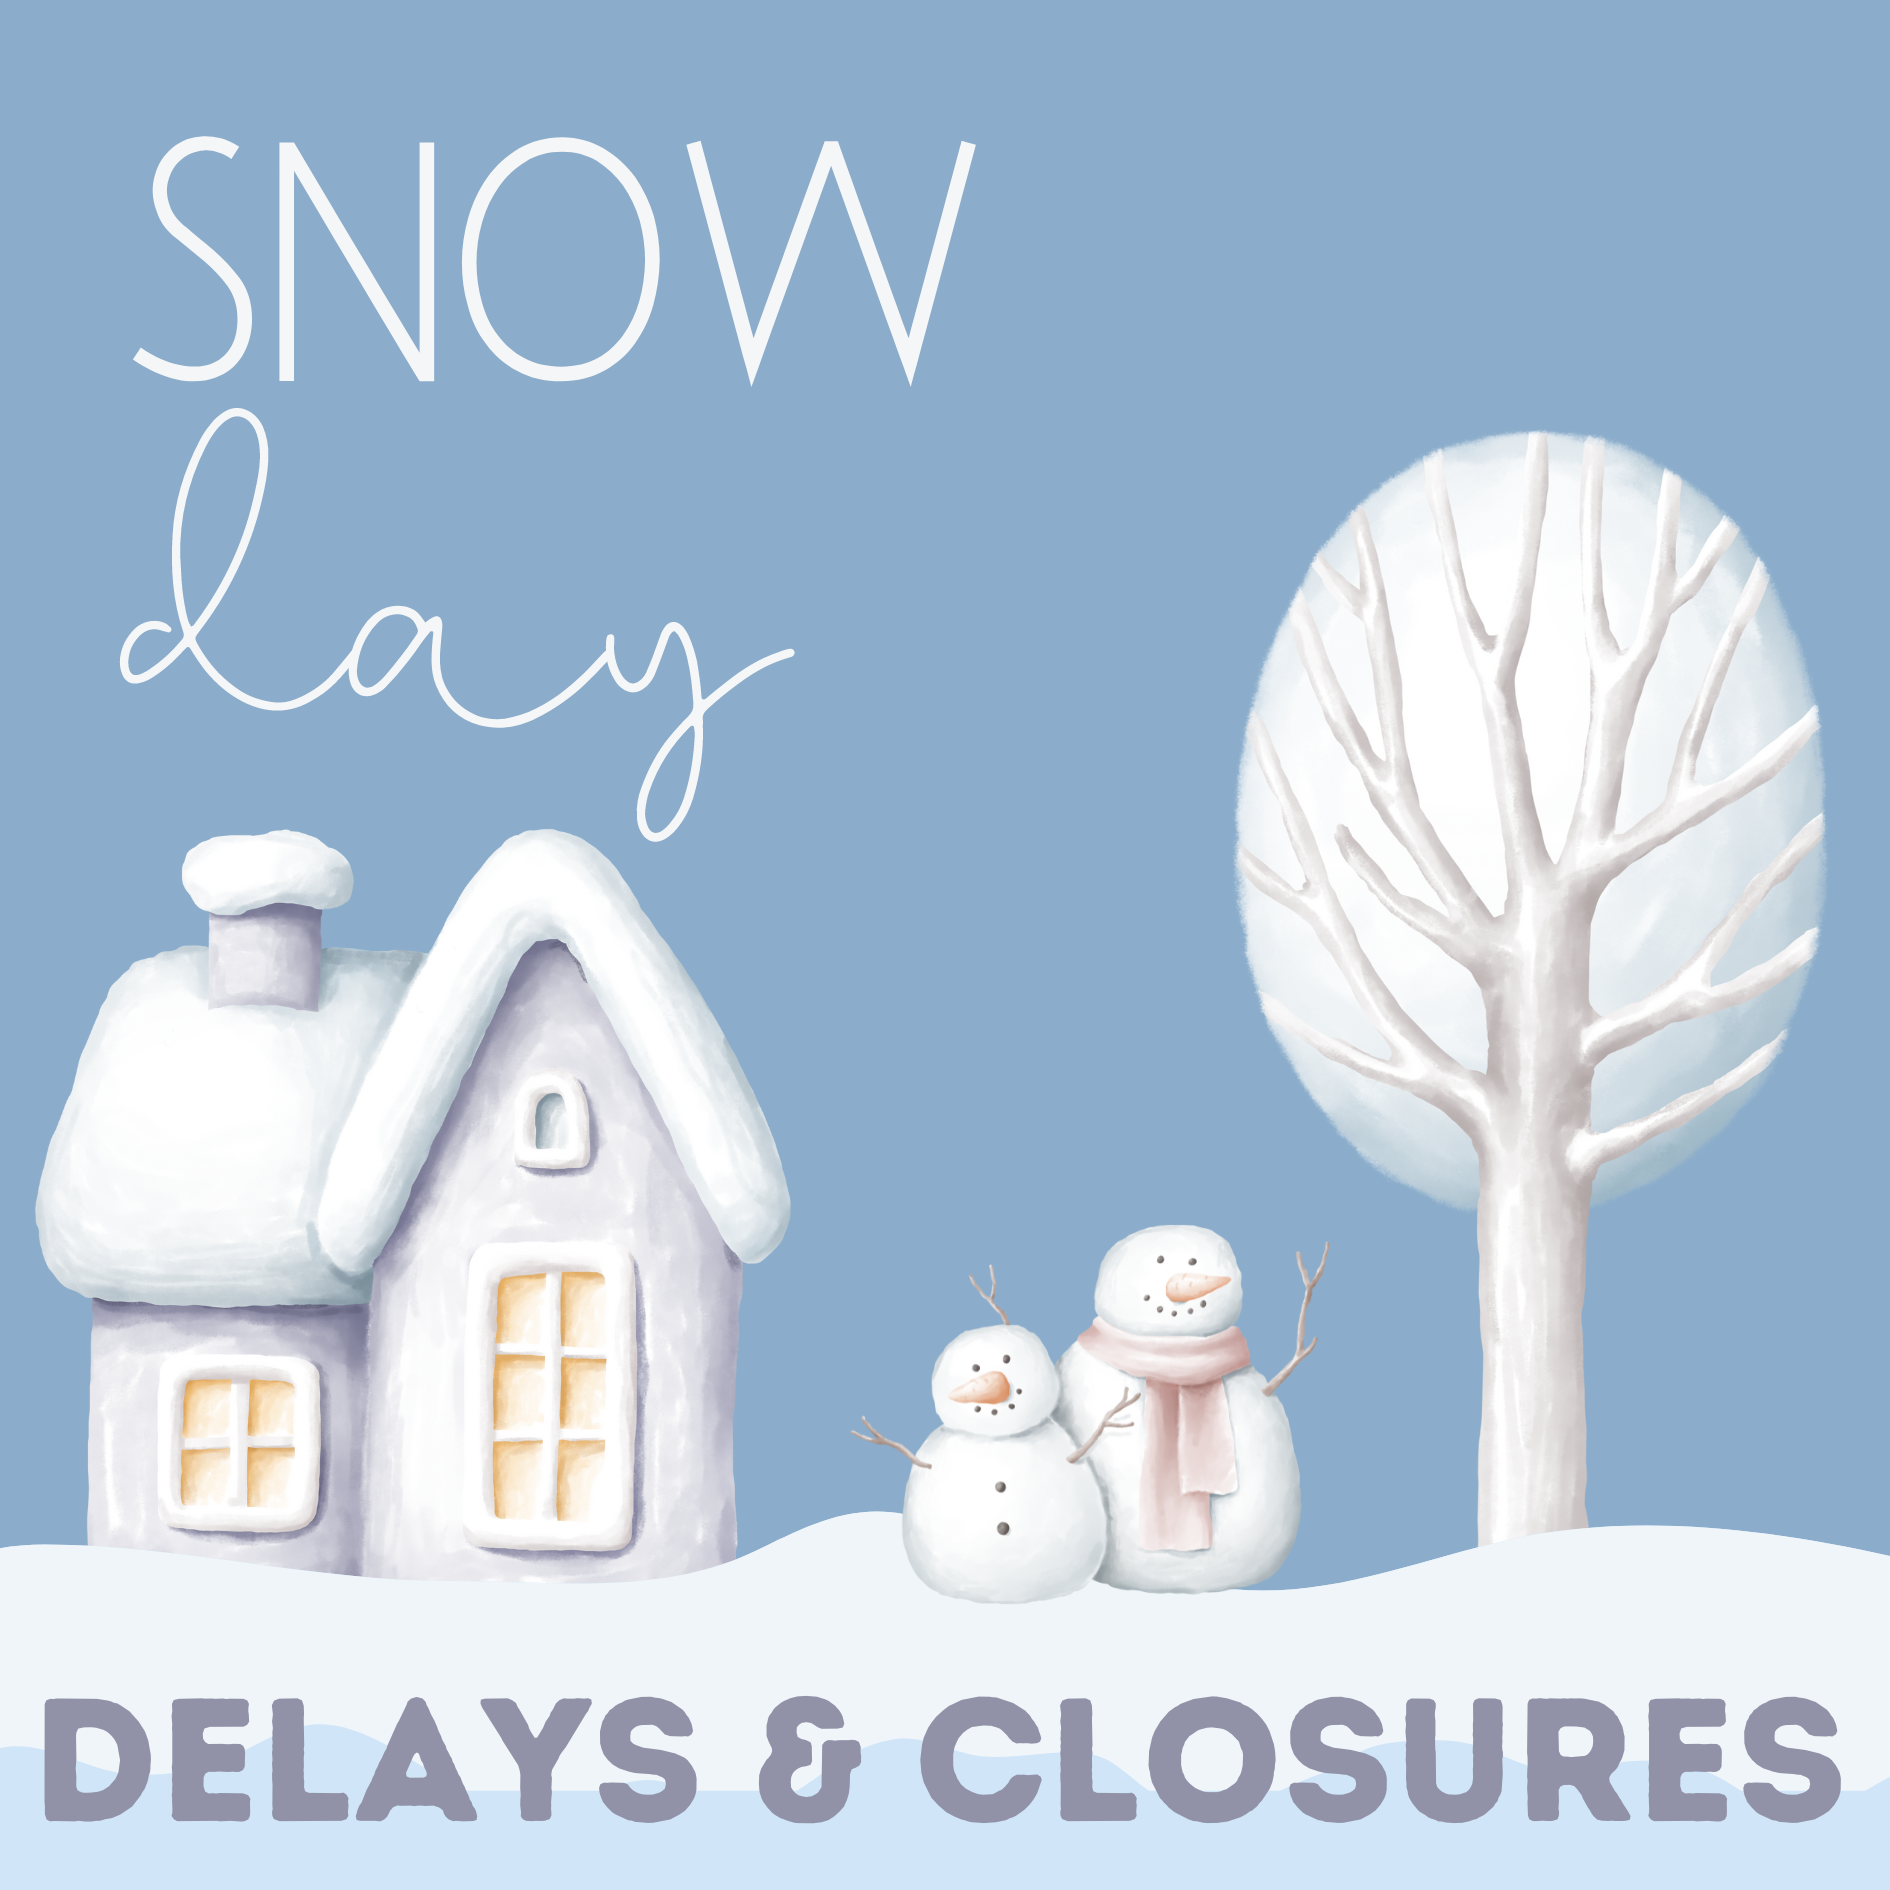 School Delays Closures Snow Day Snow Scene